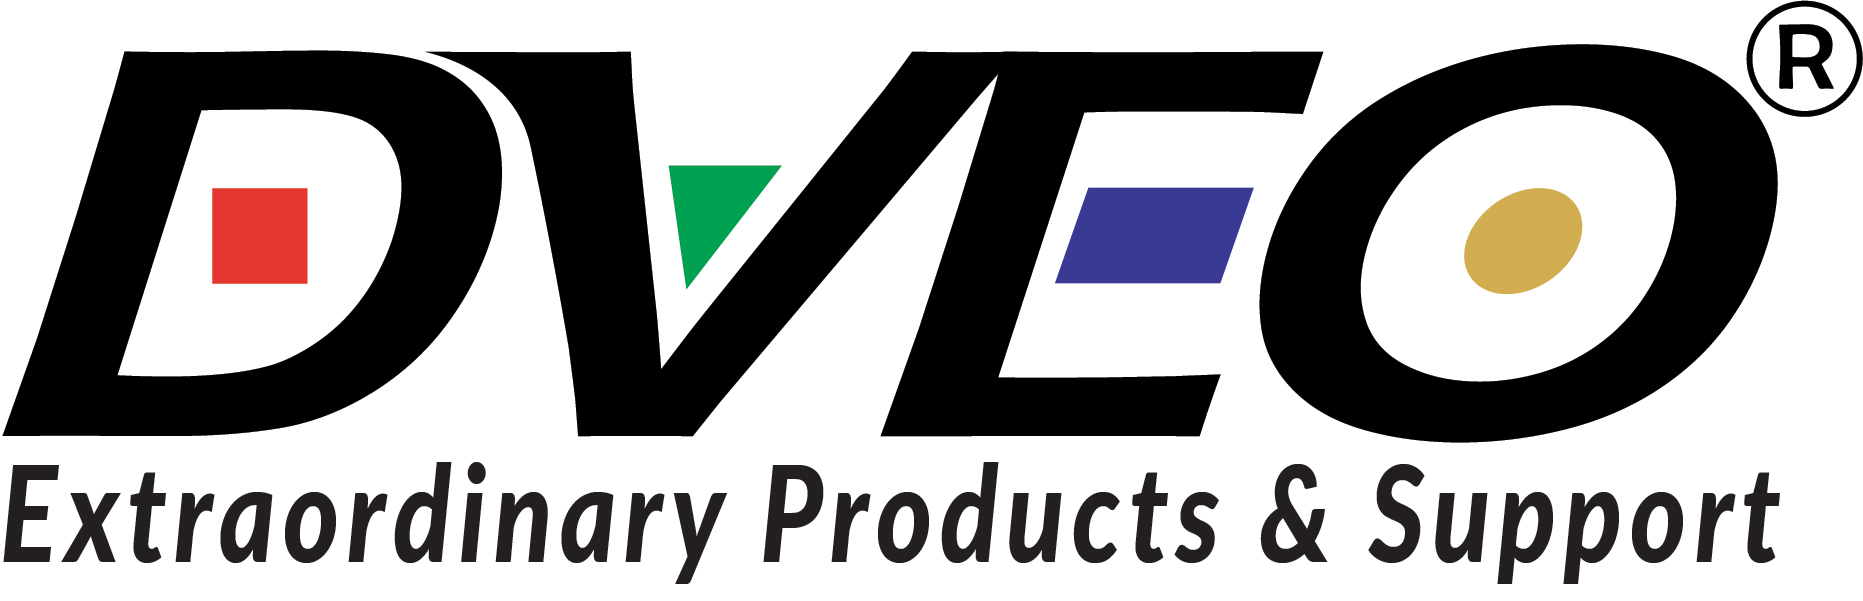 Dveo Logo - DVEO Logo and Marketing Materials